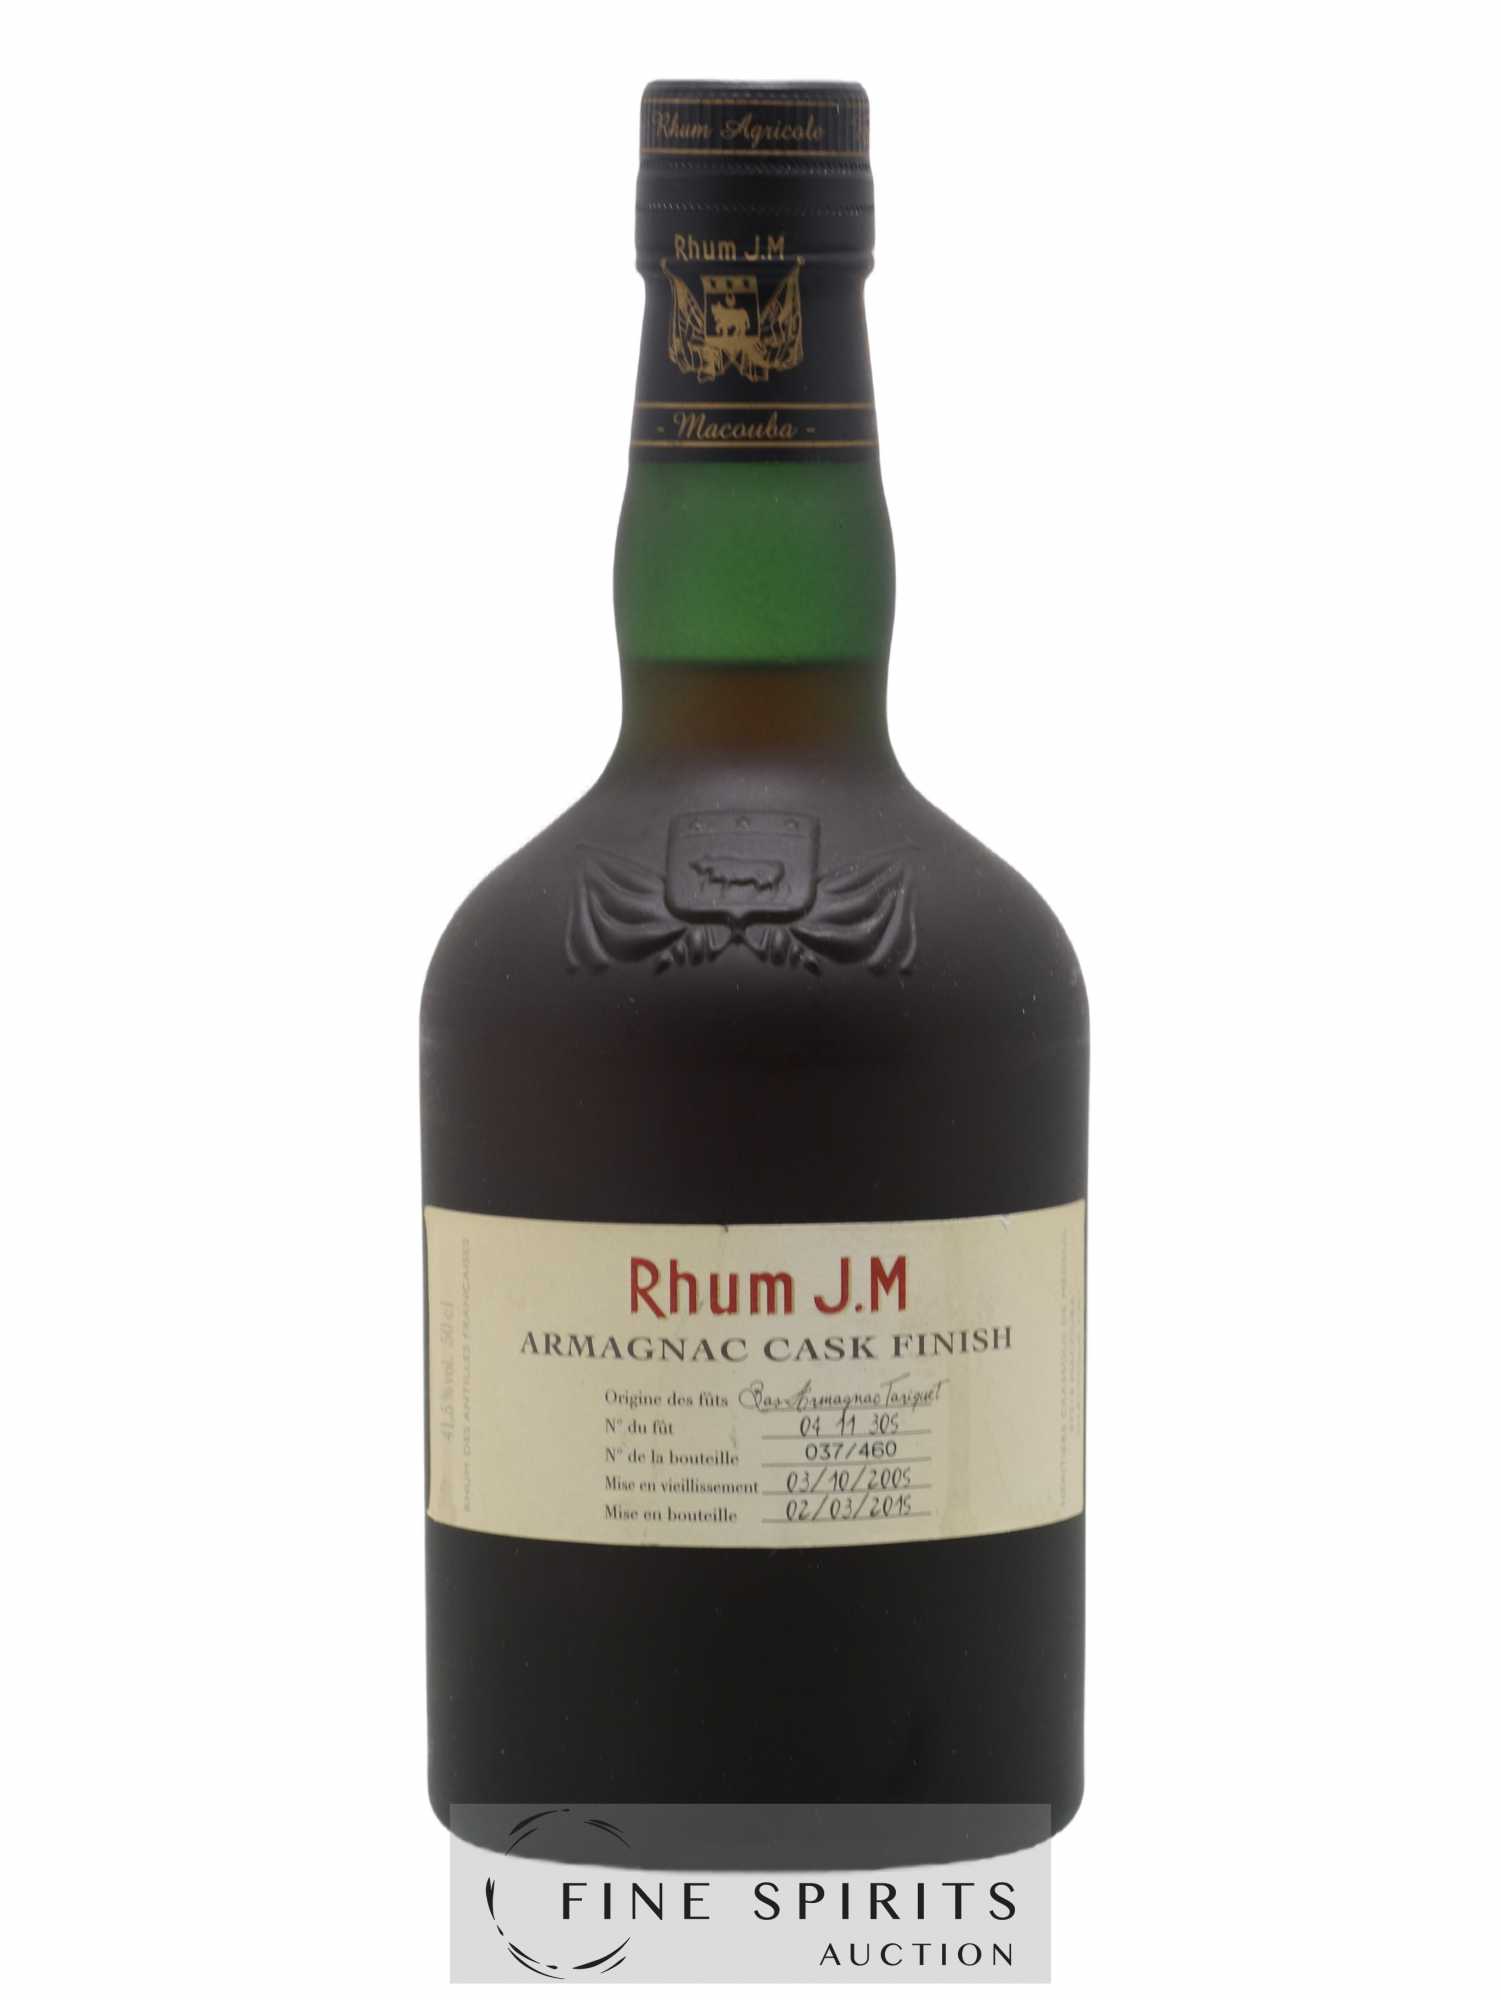 J.M 2005 Of. Armagnac Cask n°0411305 - One of 460 - bottled 2015 50CL